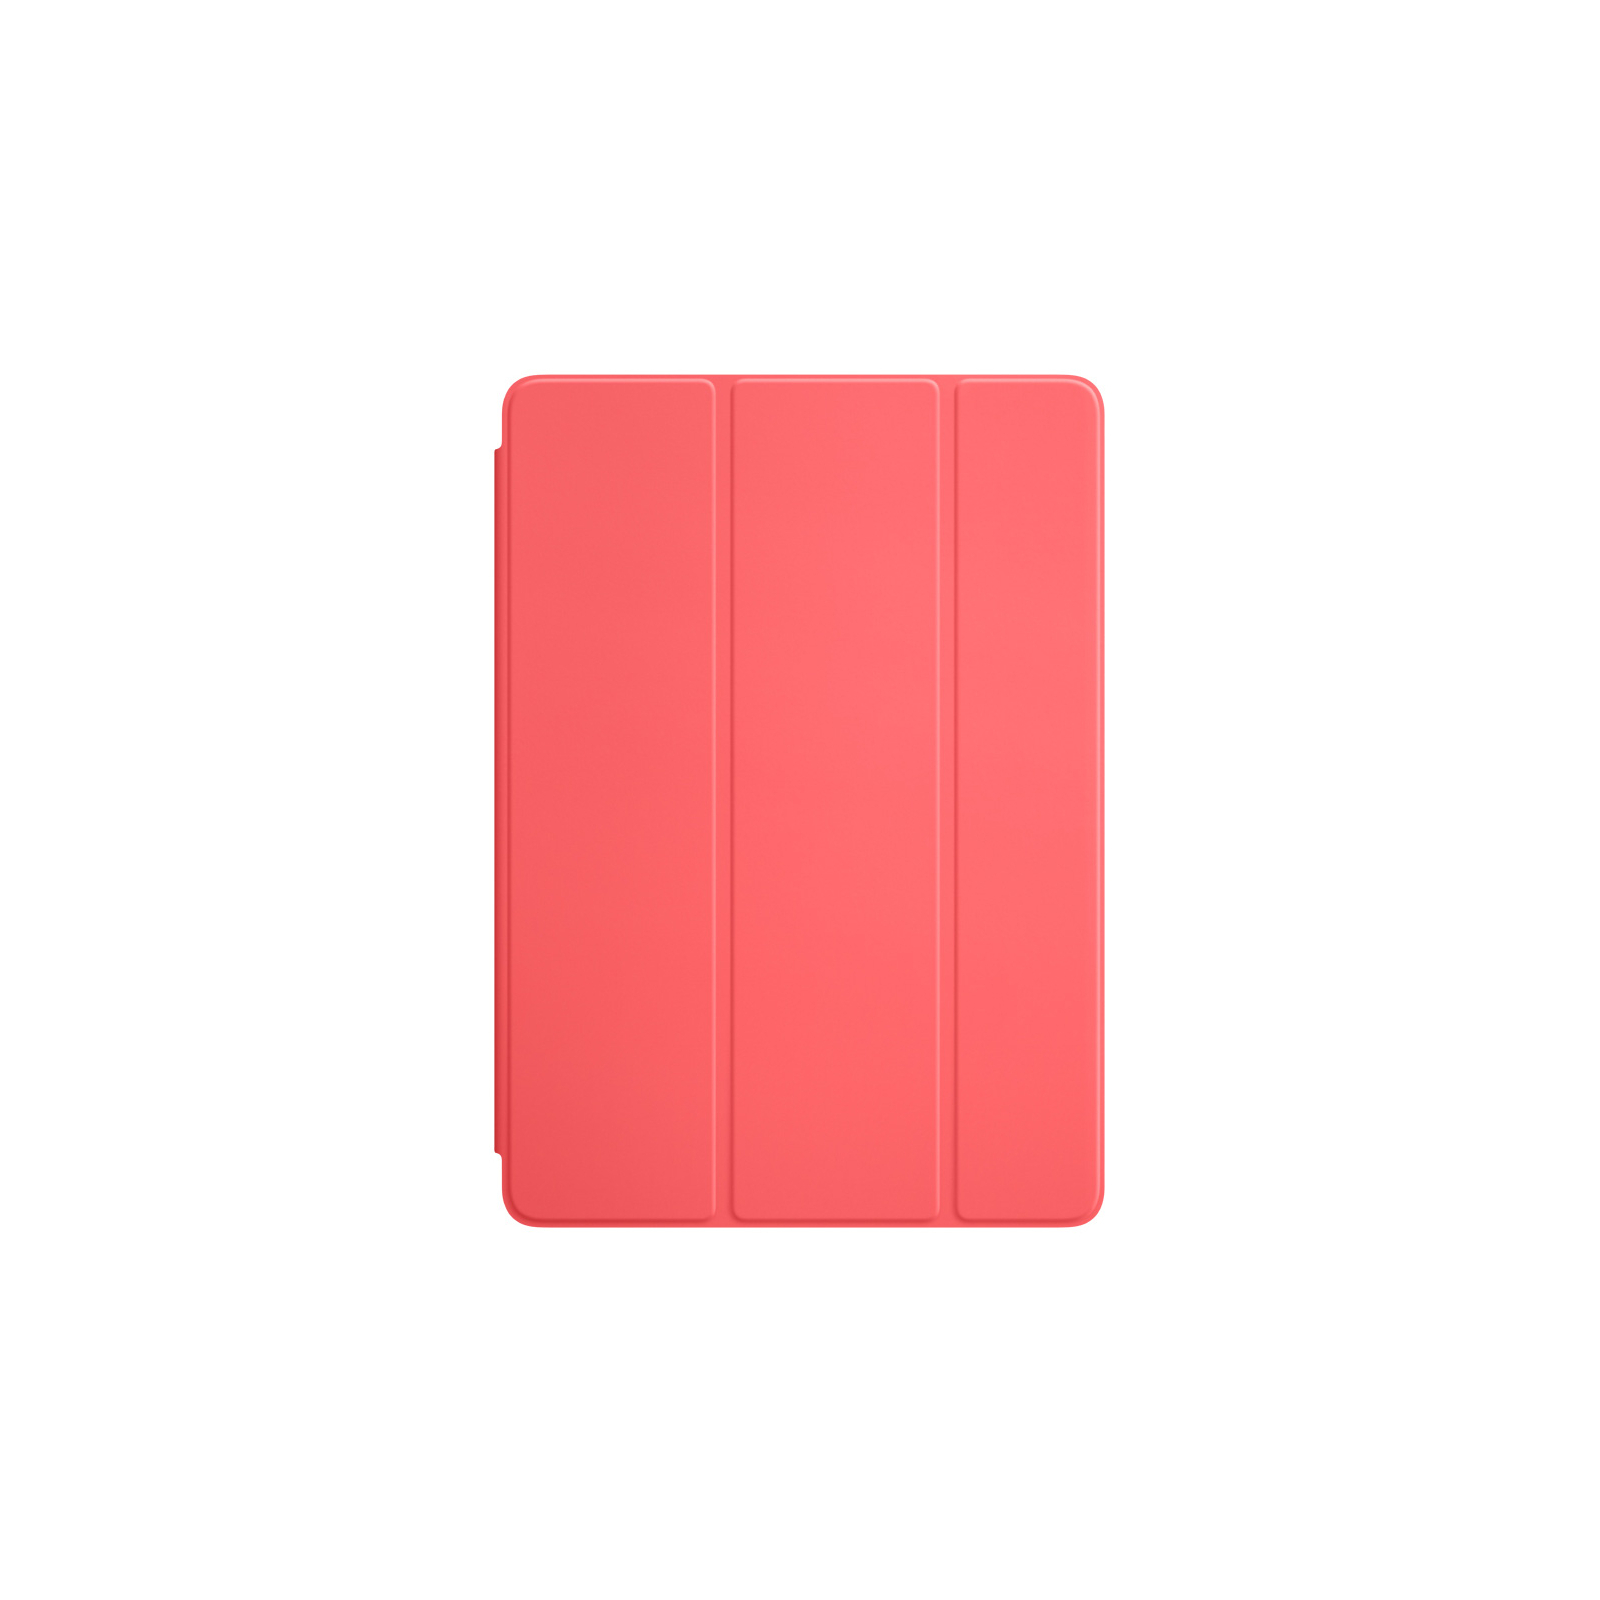 Чехол для планшета Apple Smart Cover для iPad Air (pink) (MGXK2ZM/A)